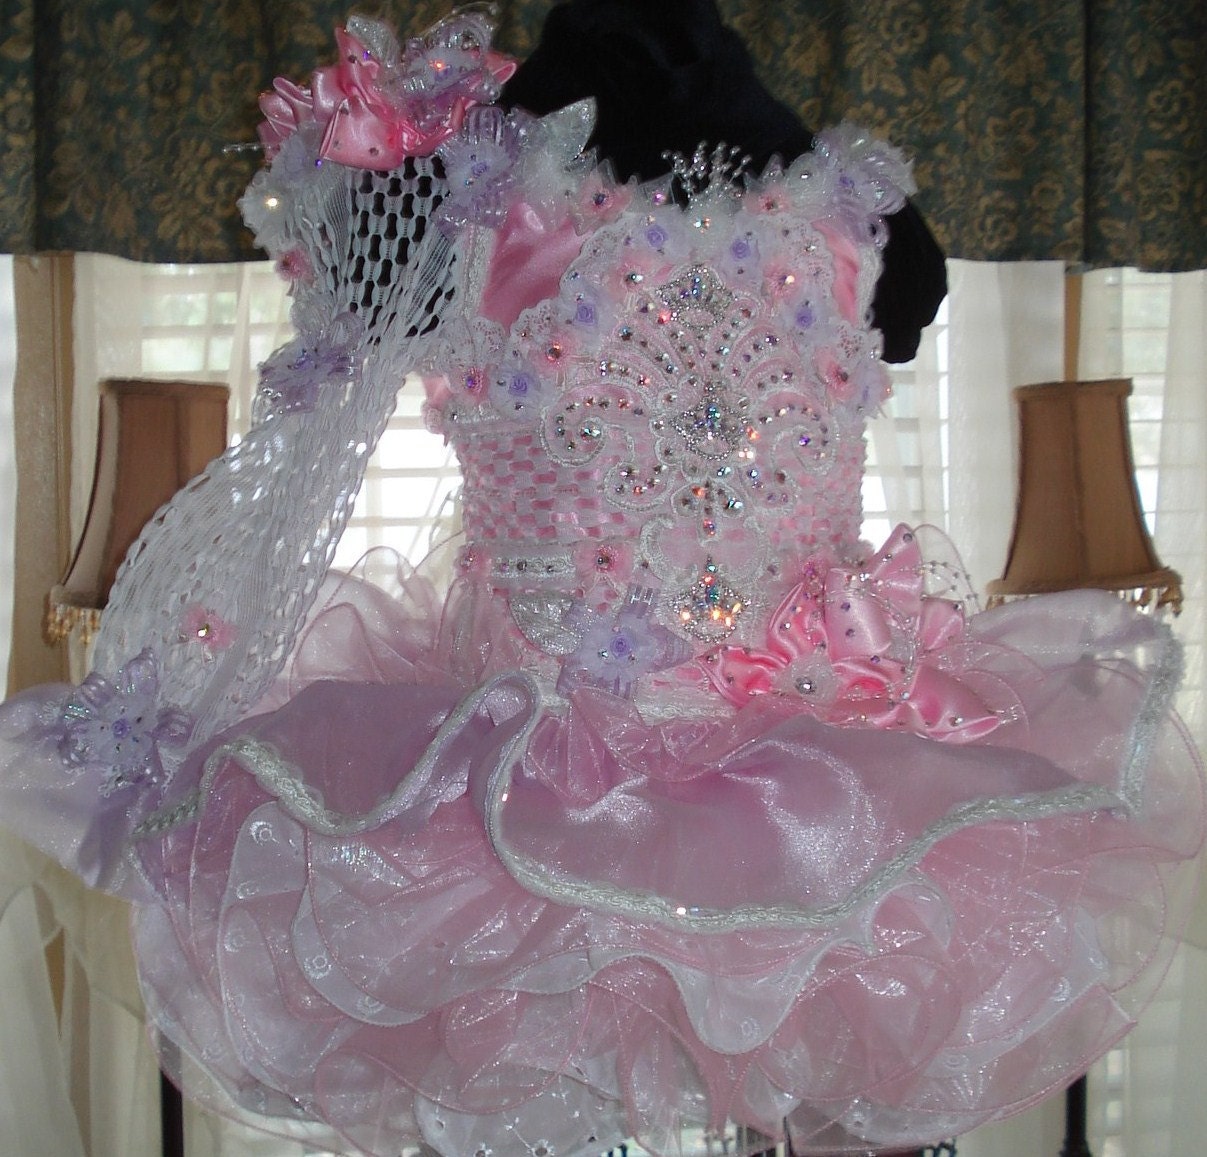 custom pageant dresses